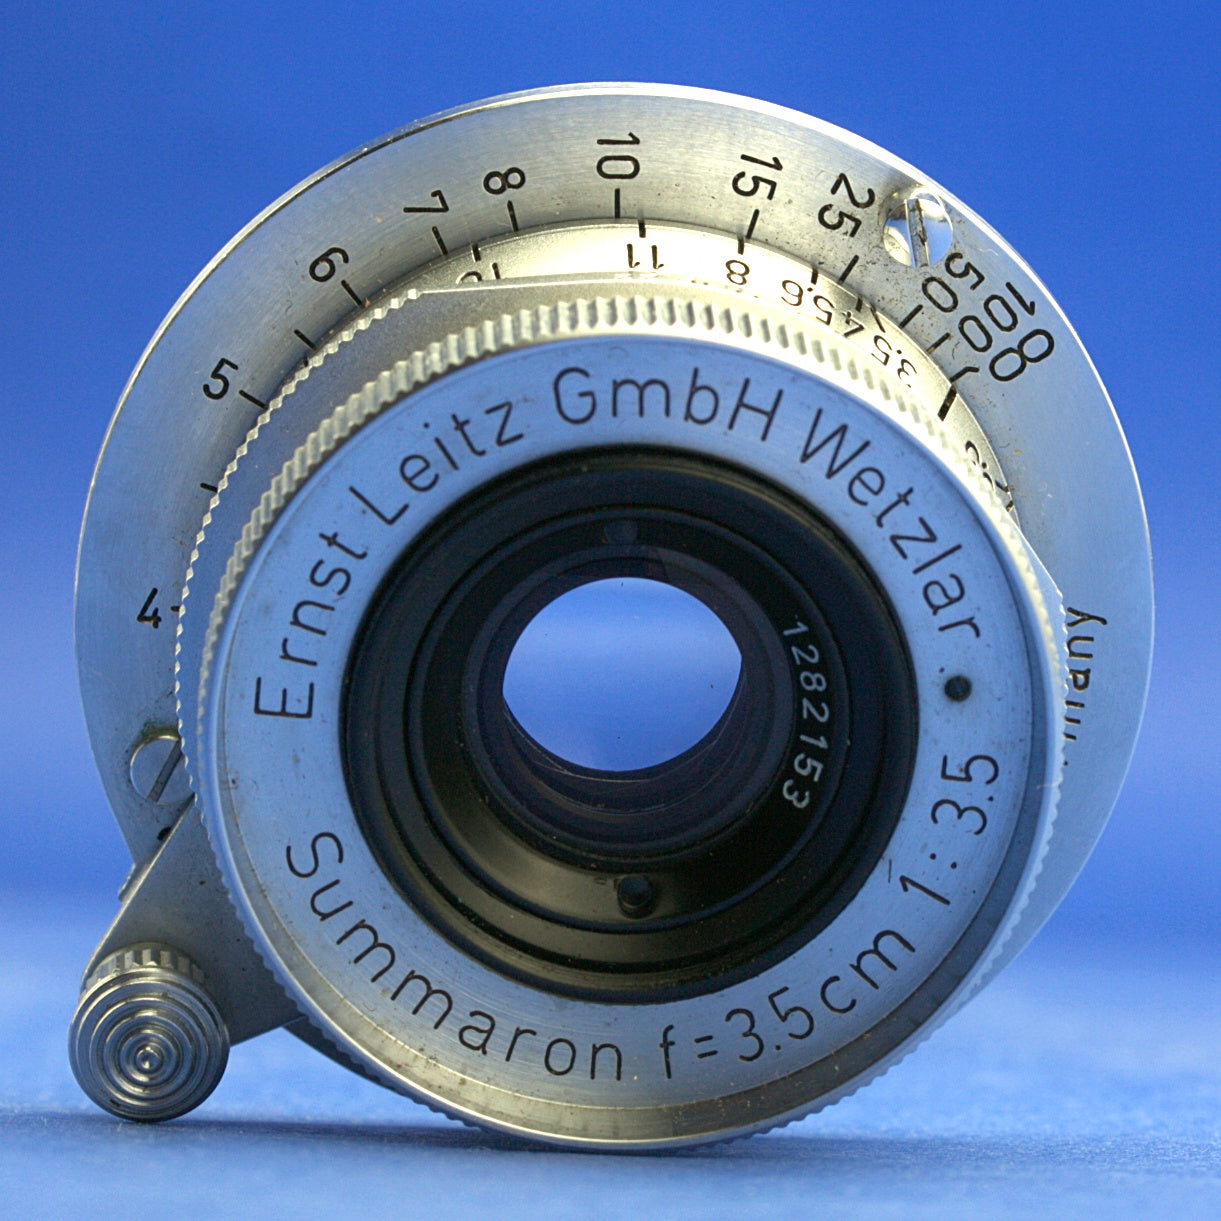 Leica Summaron 35mm 3.5 LTM Lens Beautiful Condition